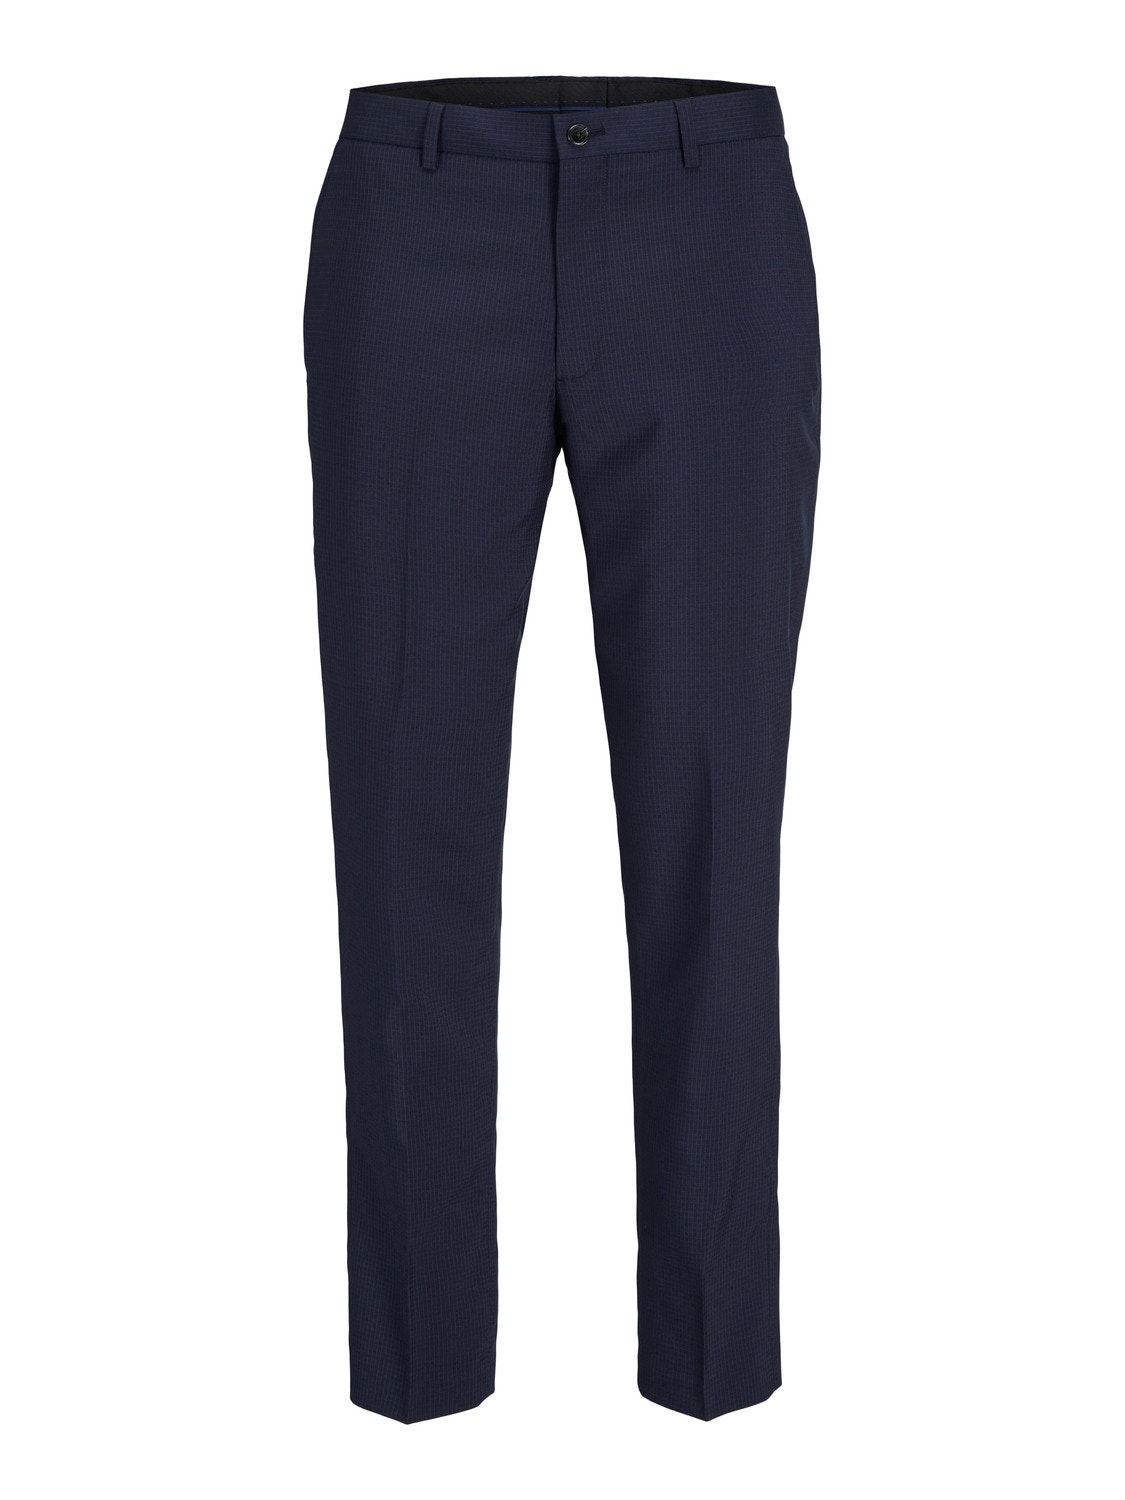 Tailored Navy Blue Women's Slim Pants